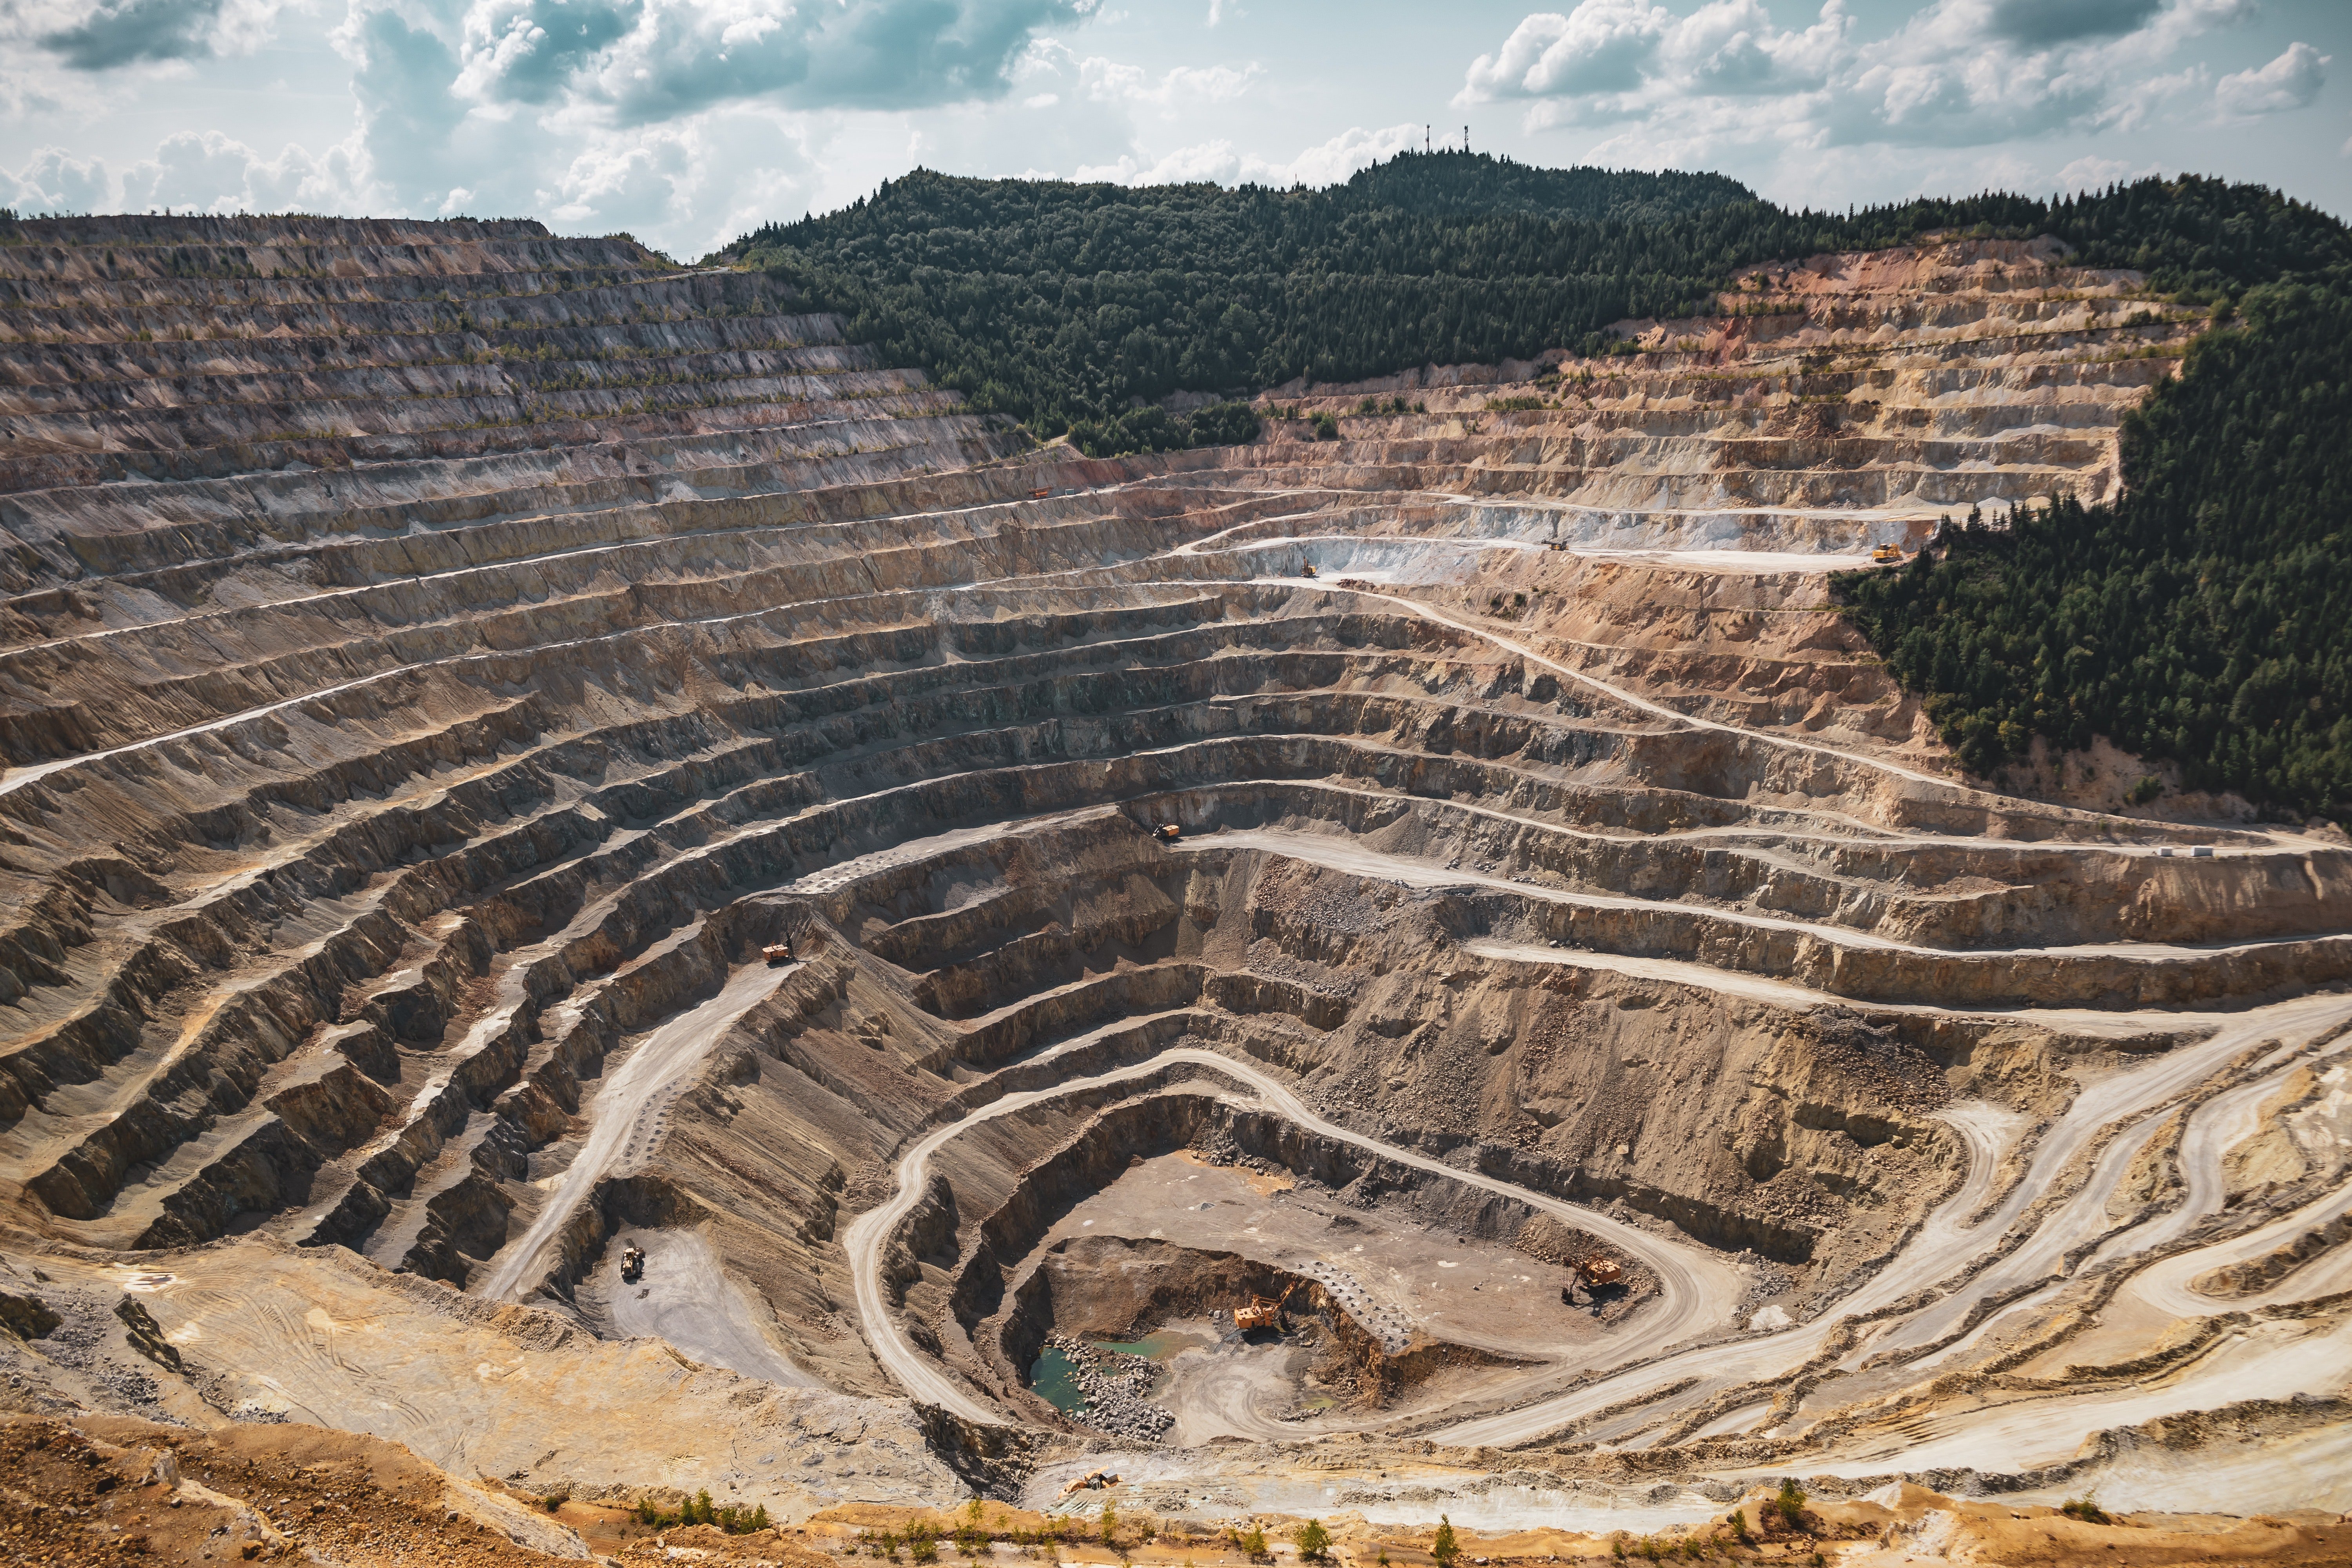 More U.S. Lithium Mining Raises Environmental, Ethical Concerns